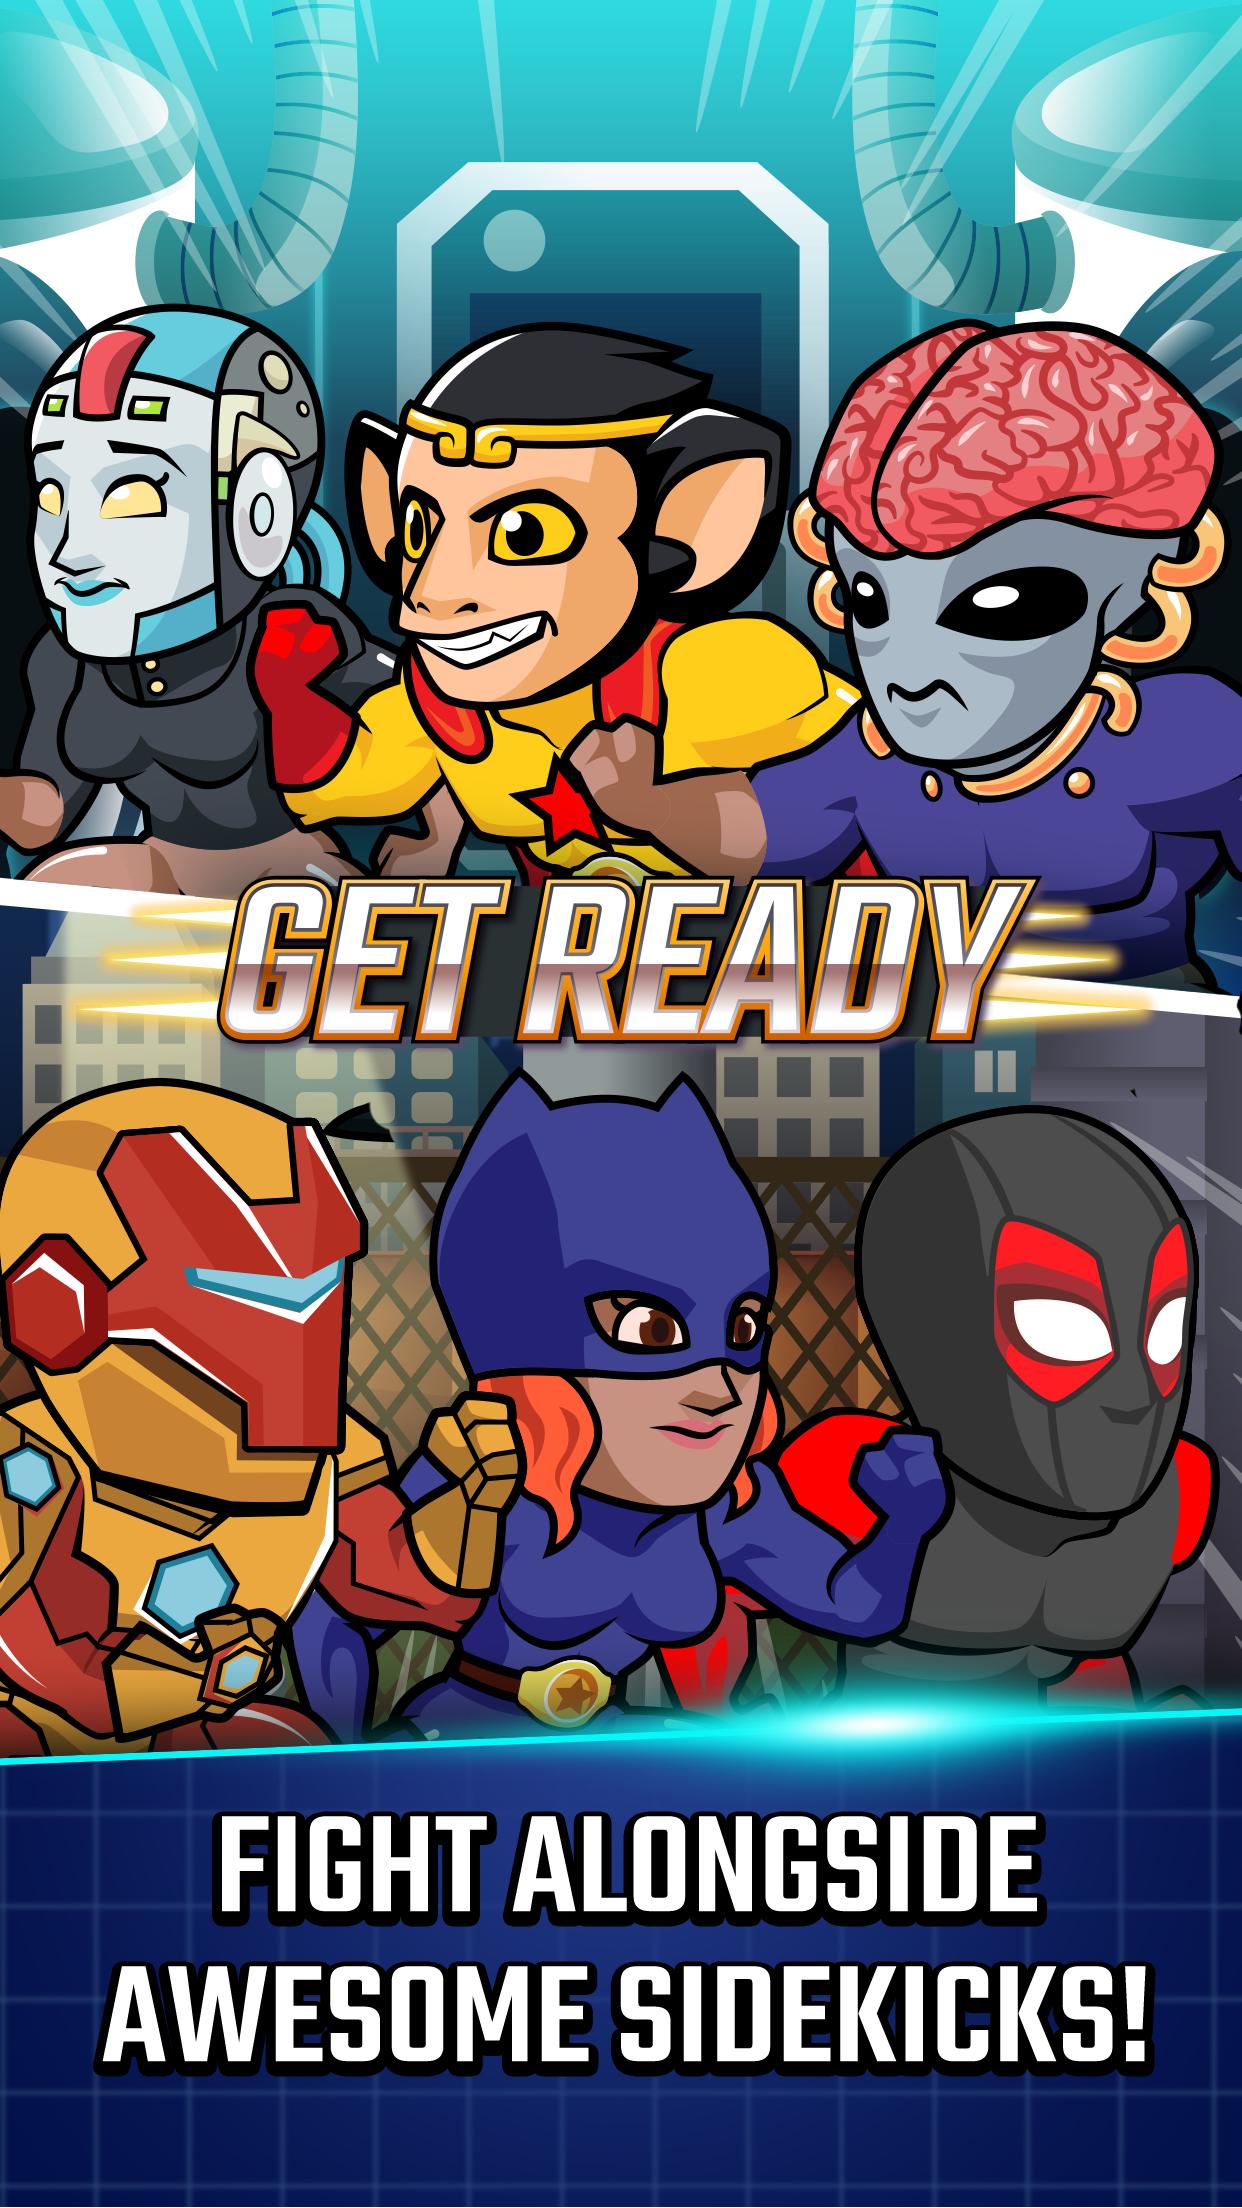 Super League of Heroes - Comic Book Champions 1.0.7 Screenshot 5